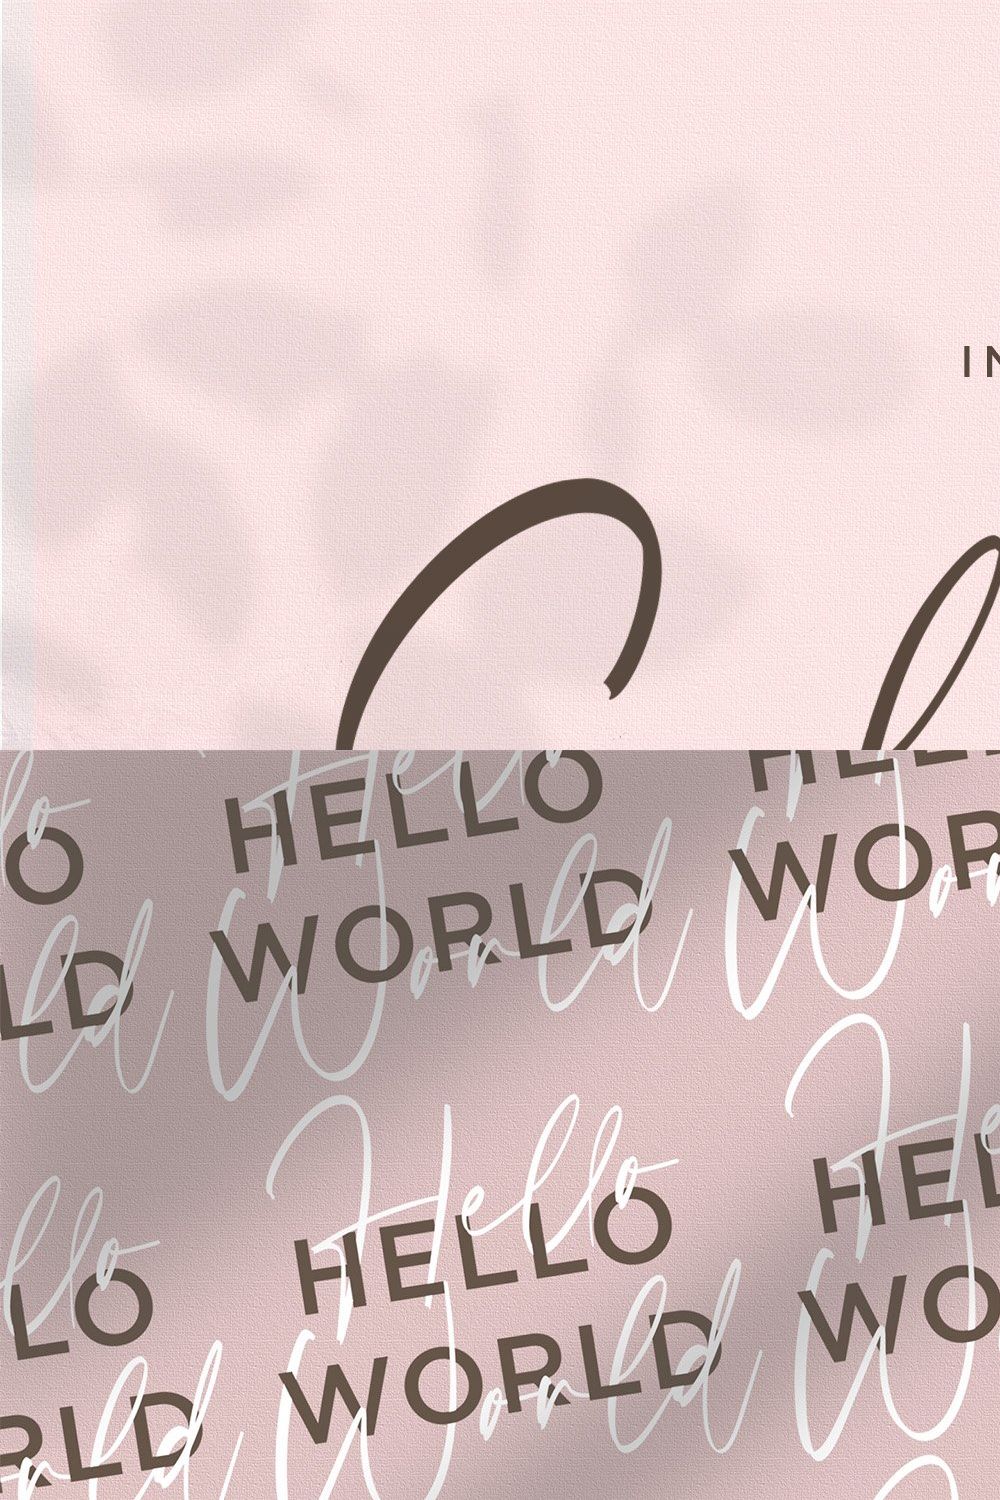 Sellviny - Handwritten Font pinterest preview image.